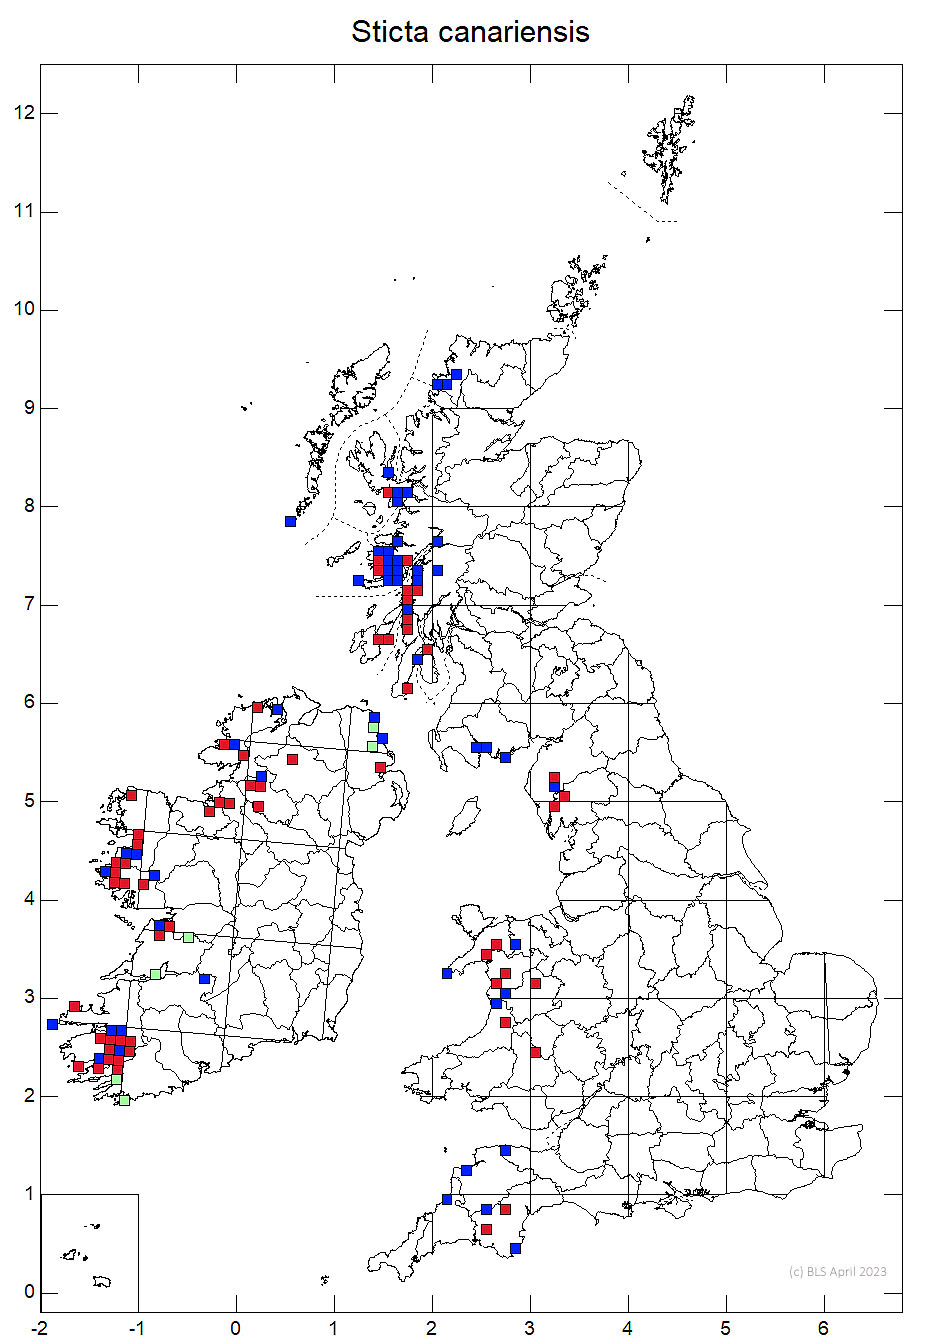 Sticta canariensis 10km sq distribution map